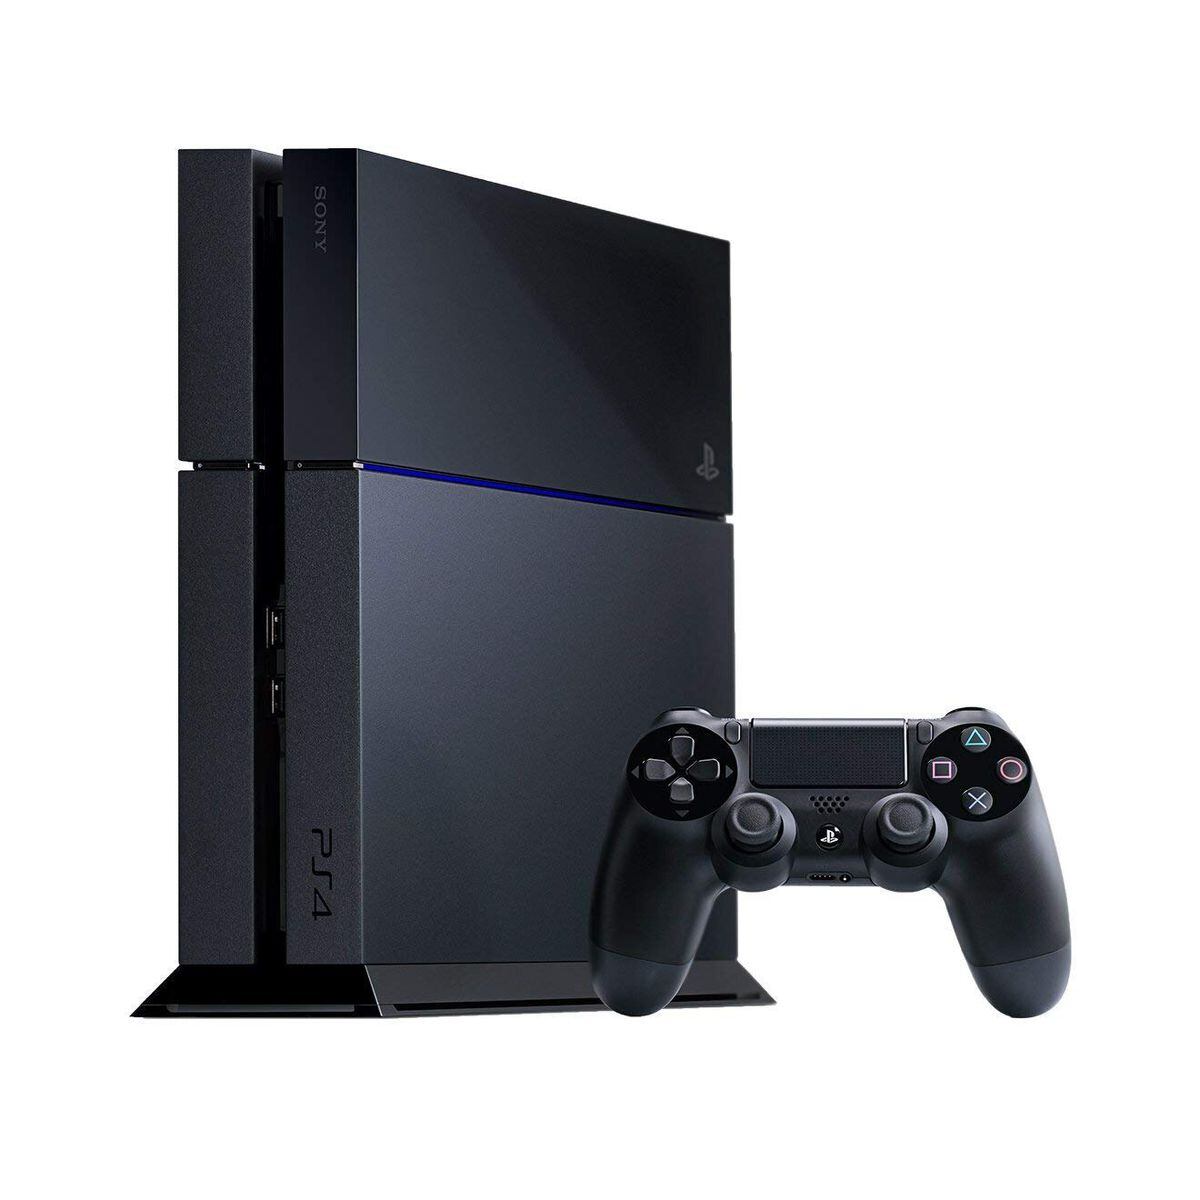 Sony reduz preço do PlayStation 4 e PS4 Pro após corte no imposto